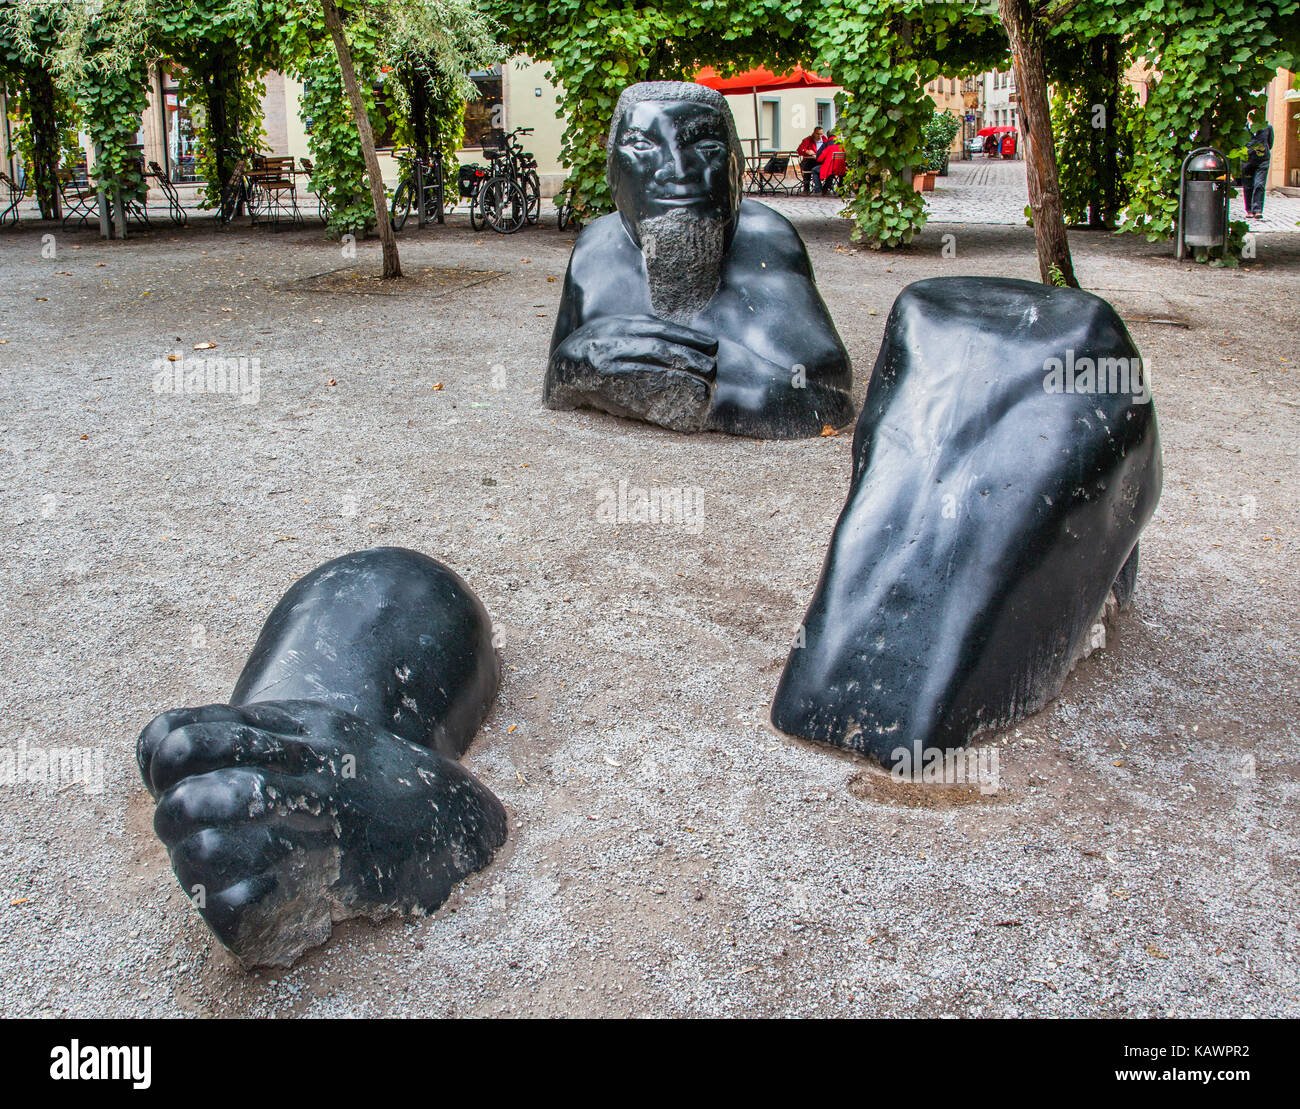 Alemania, Turingia, Weimar, Frauenplan, escultura 'Sunken gigante (Versunkener Riese) por el escultor alemán Walter Sachs Foto de stock